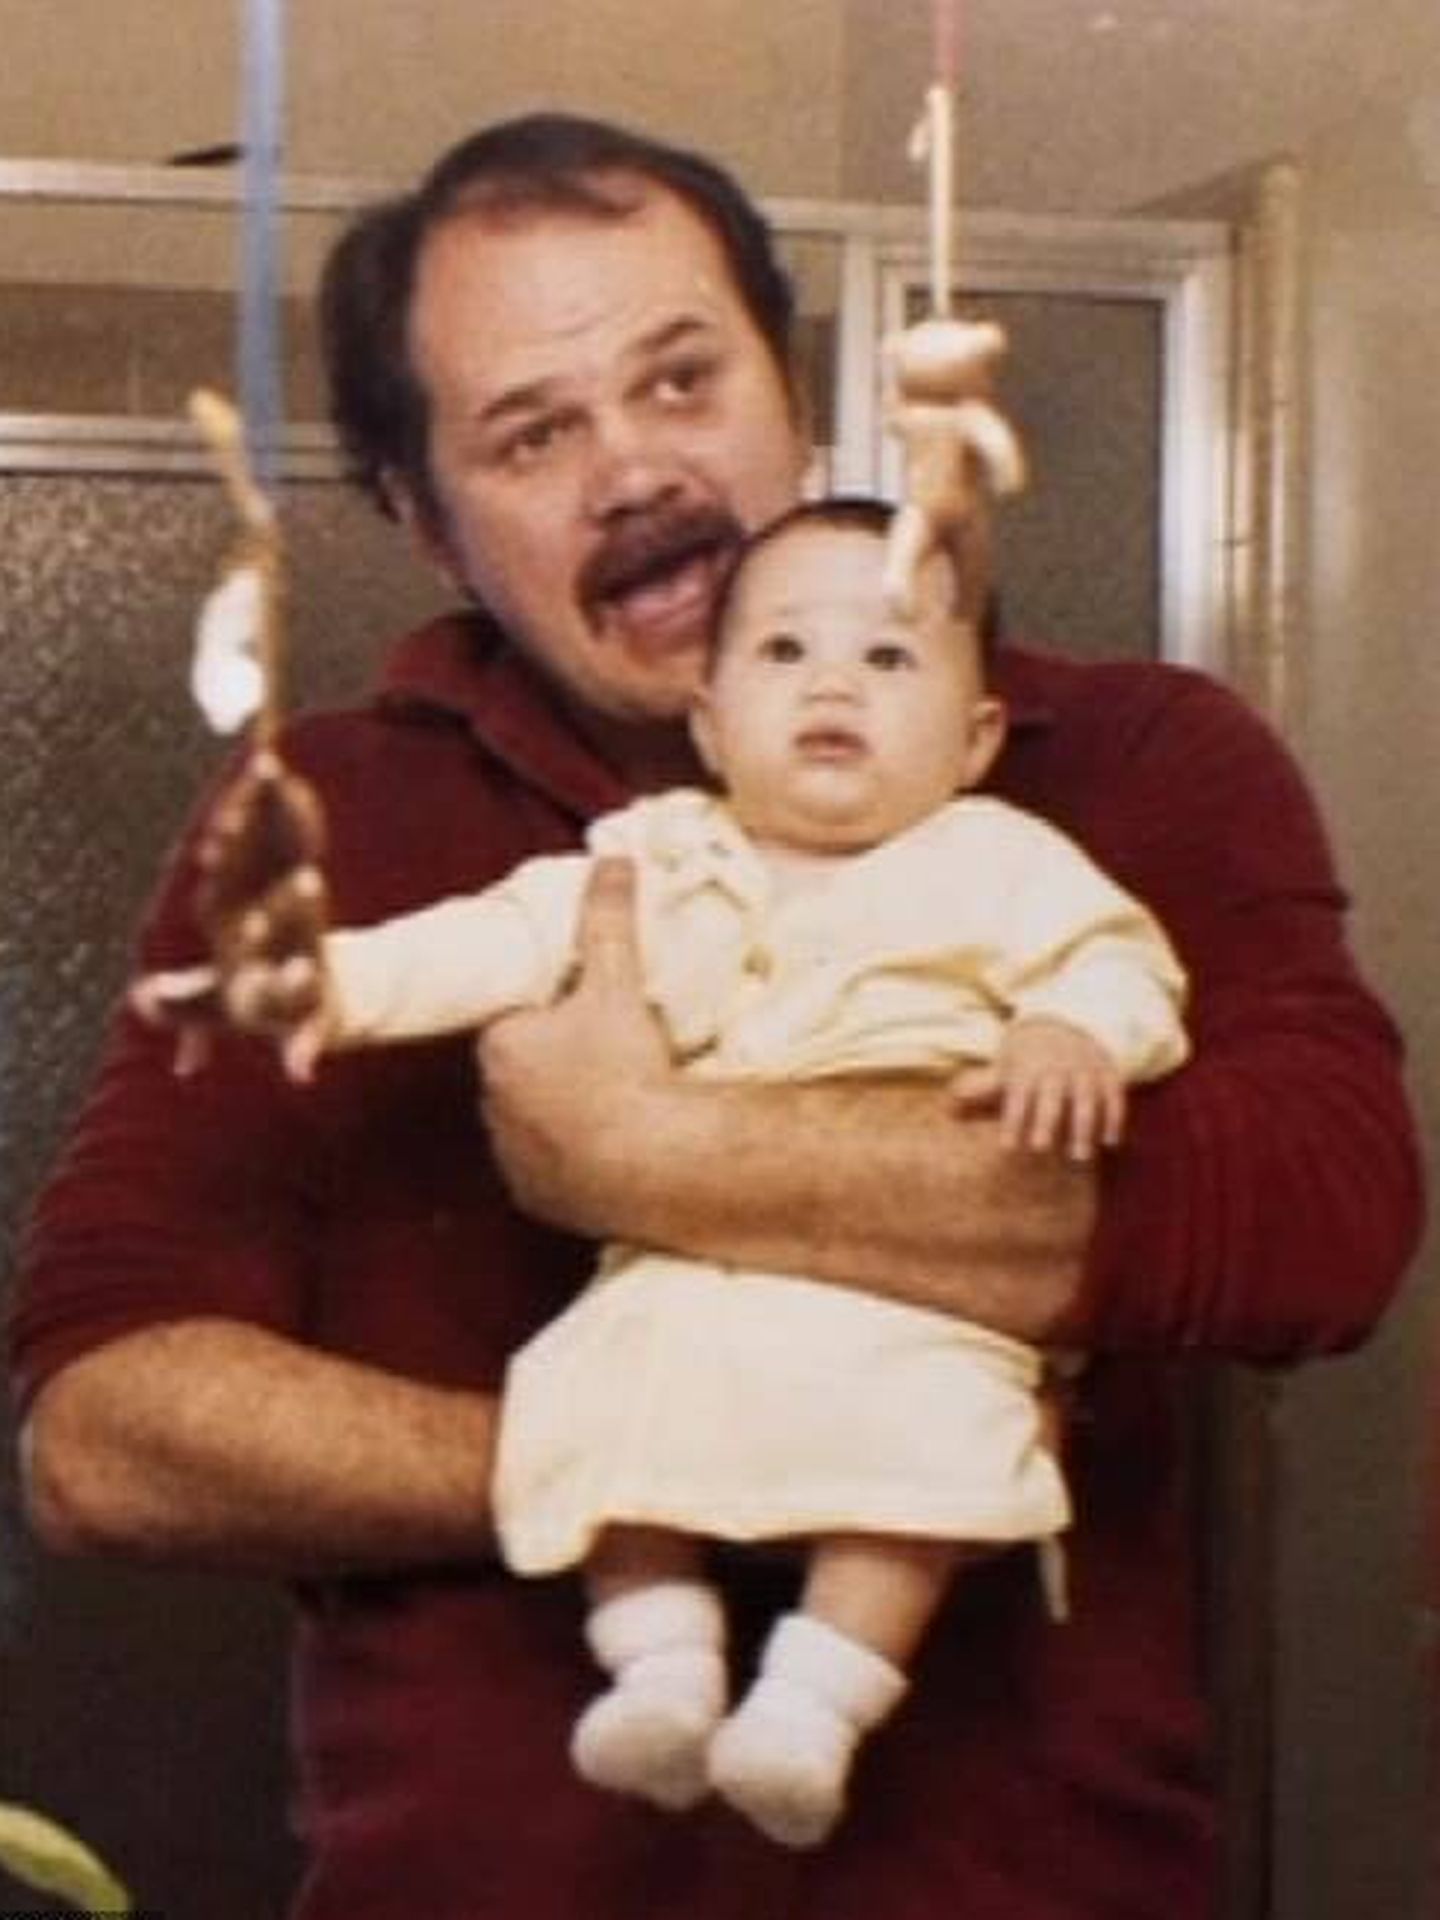 Meghan Markle, de bebé, en brazos de su padre. (Documental 'Thomas Markle: Mi historia')